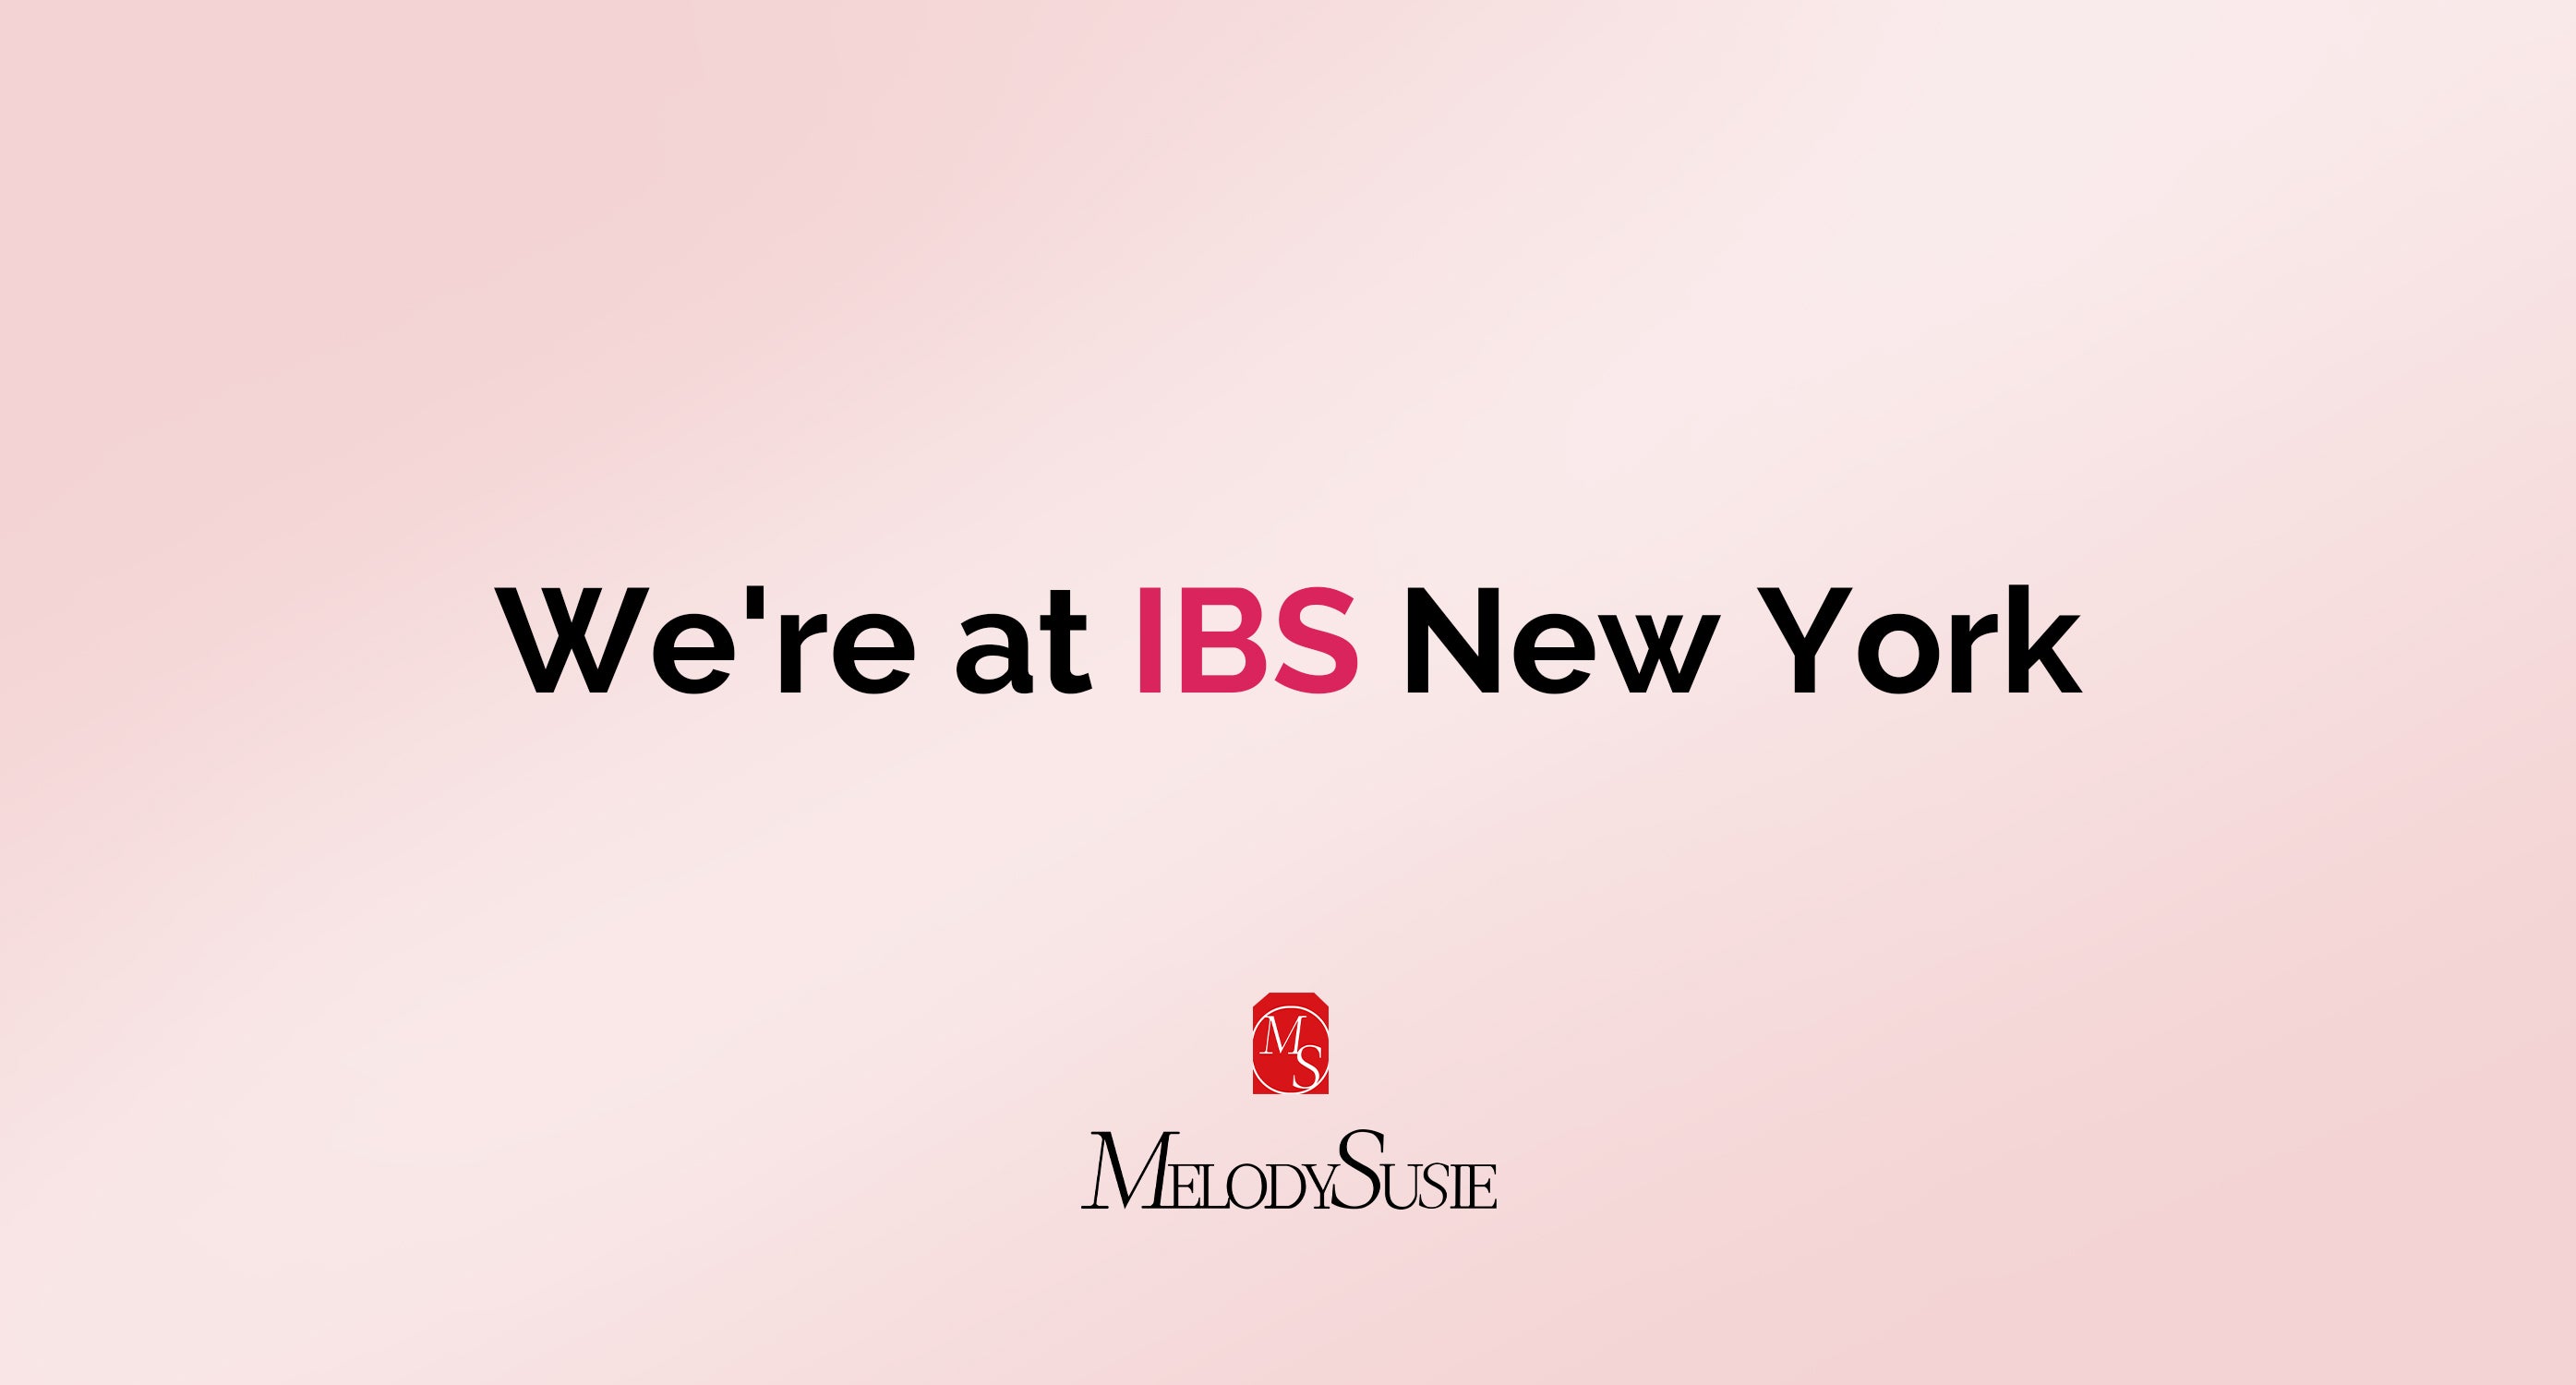 MelosySusie at IBS New York